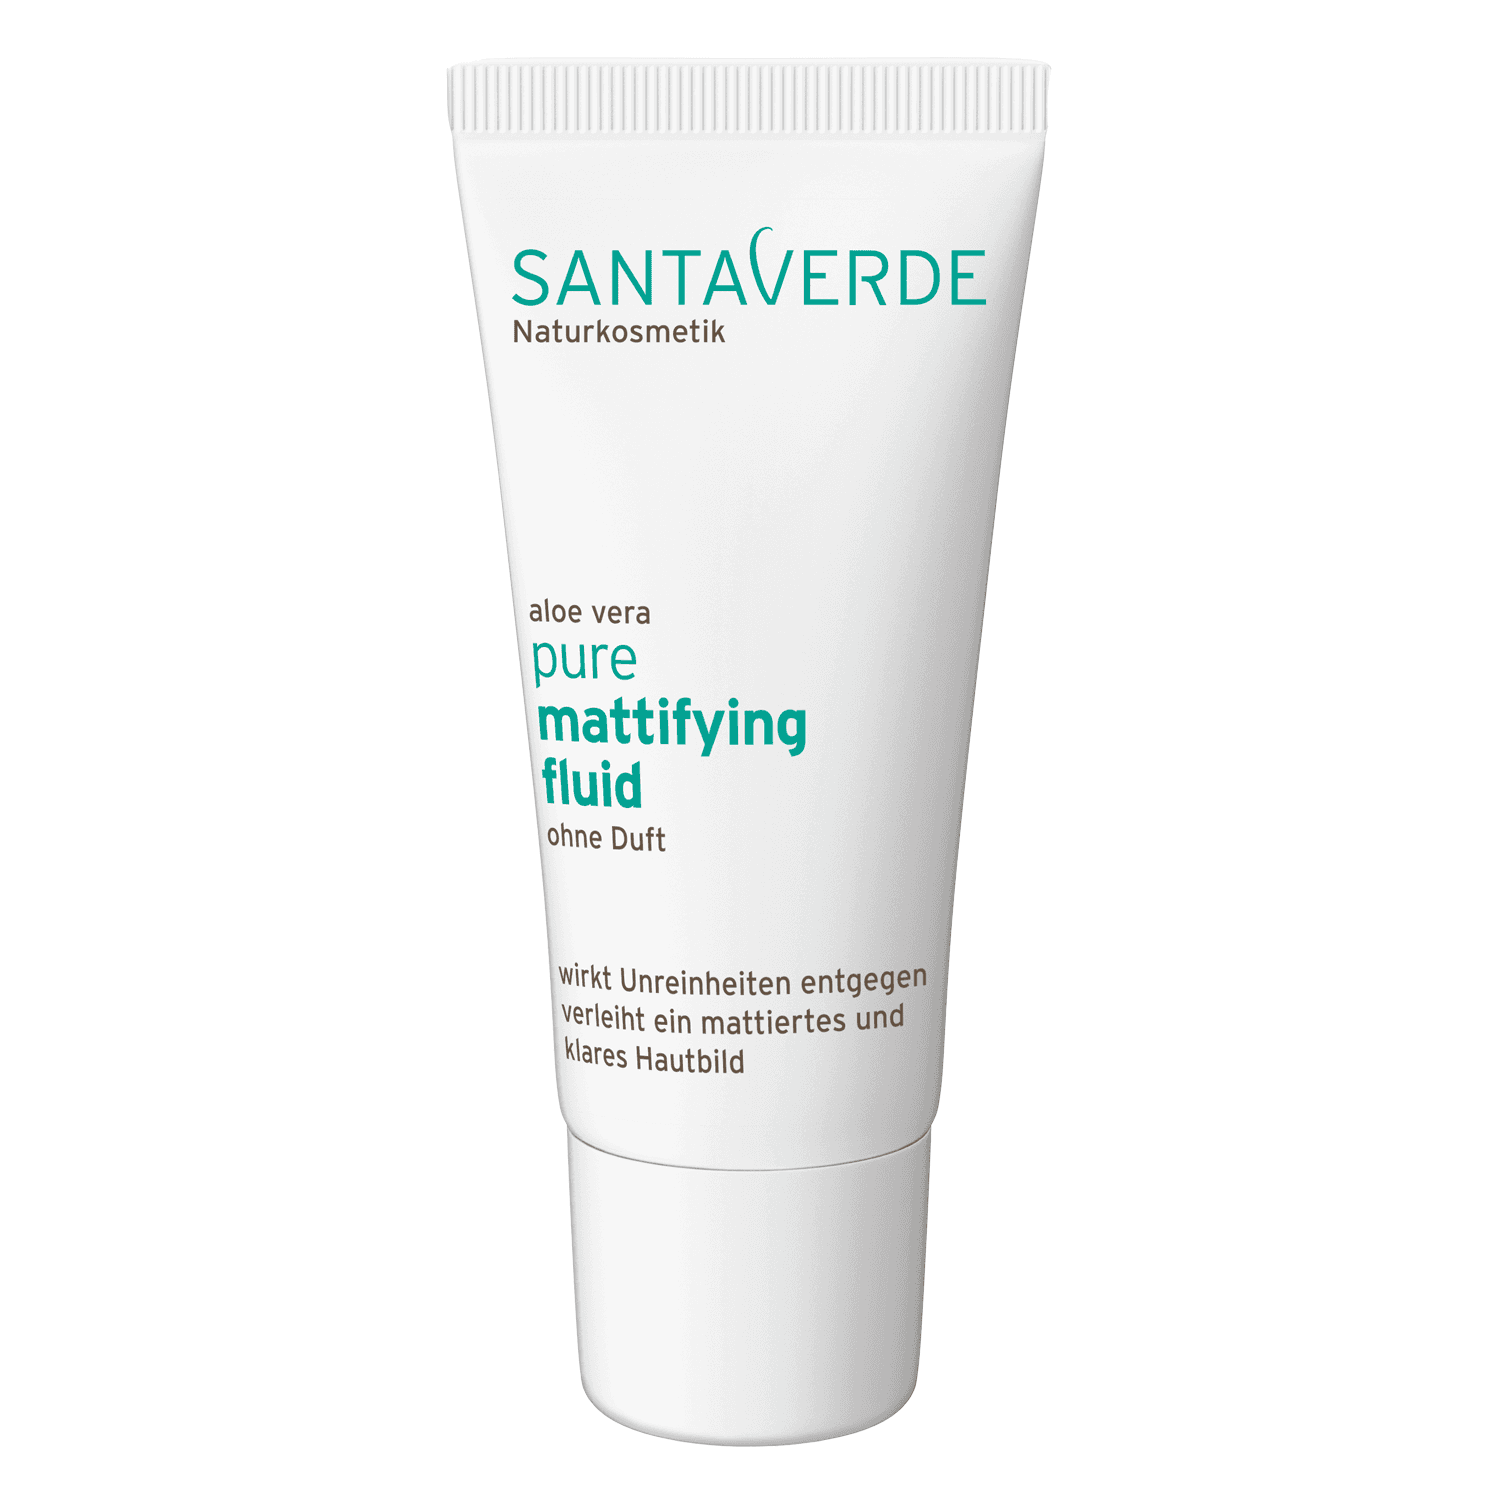 SANTAVERDE - aloe vera pure mattifying fluid without fragrance